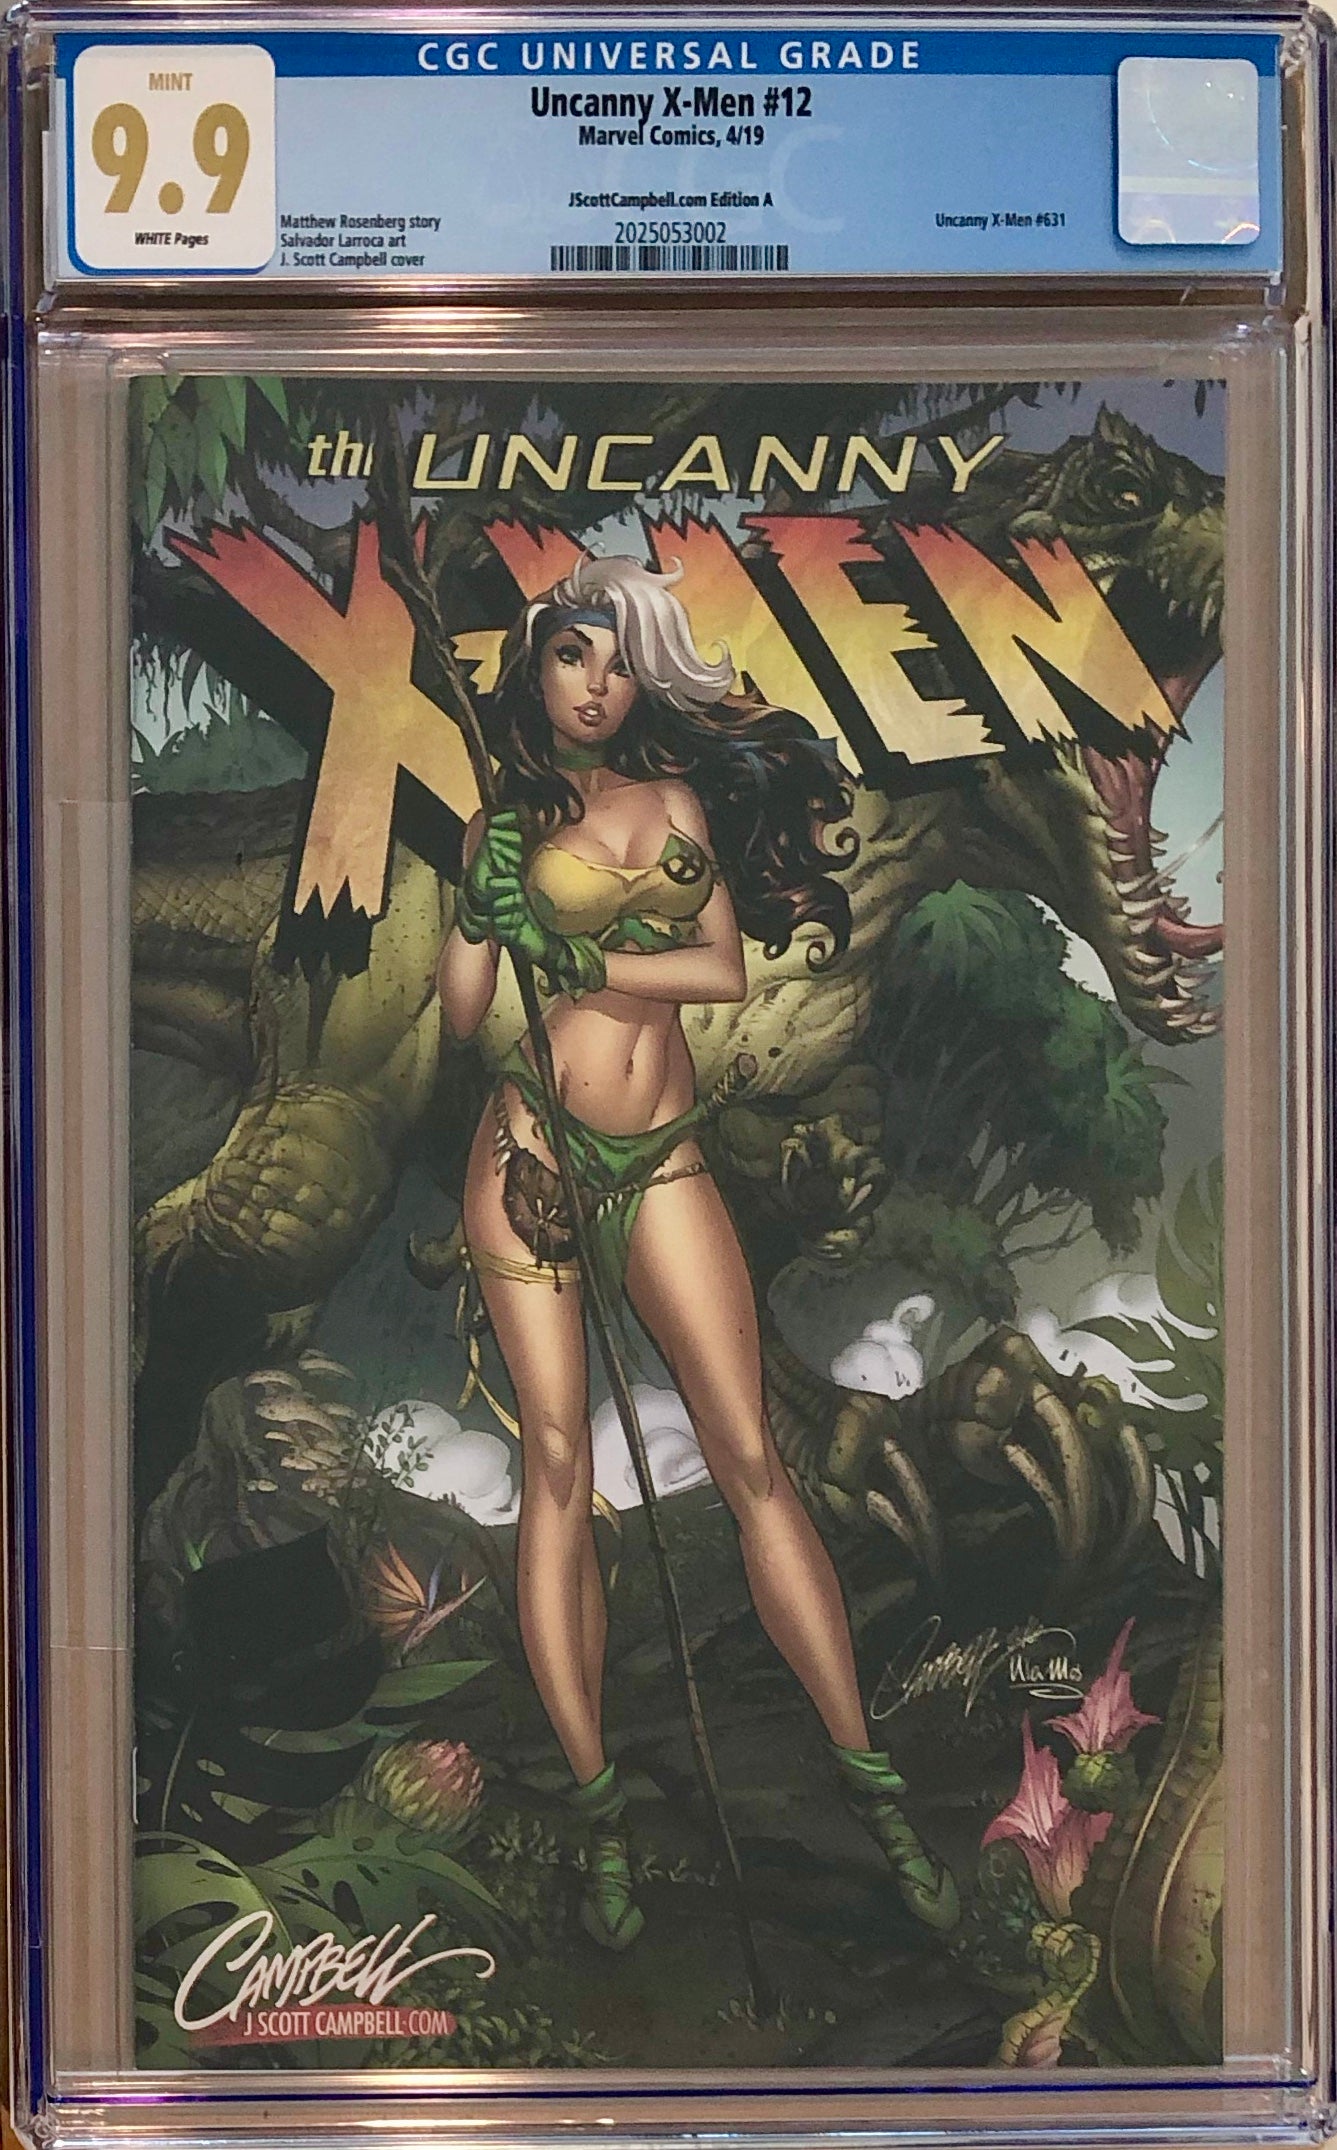 Uncanny X-Men #12 J. Scott Campbell Edition A-G Exclusive Set CGC 9.9 MINT